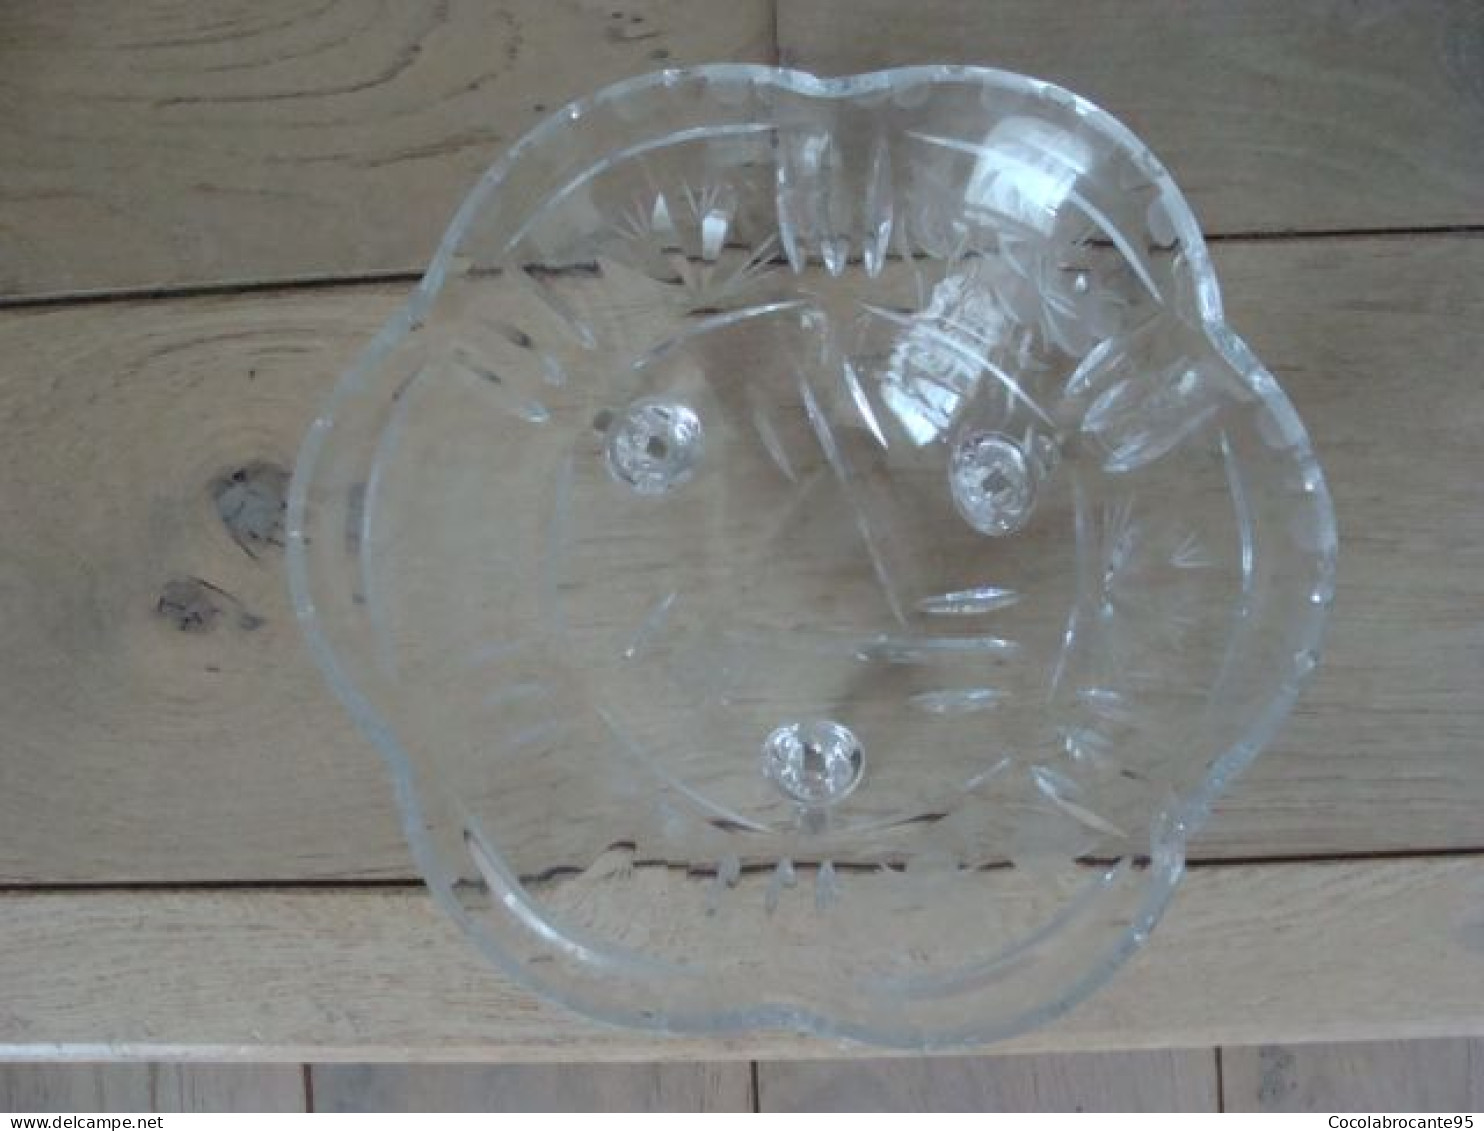 Coupe Tripode En Cristal Vintage - Glass & Crystal